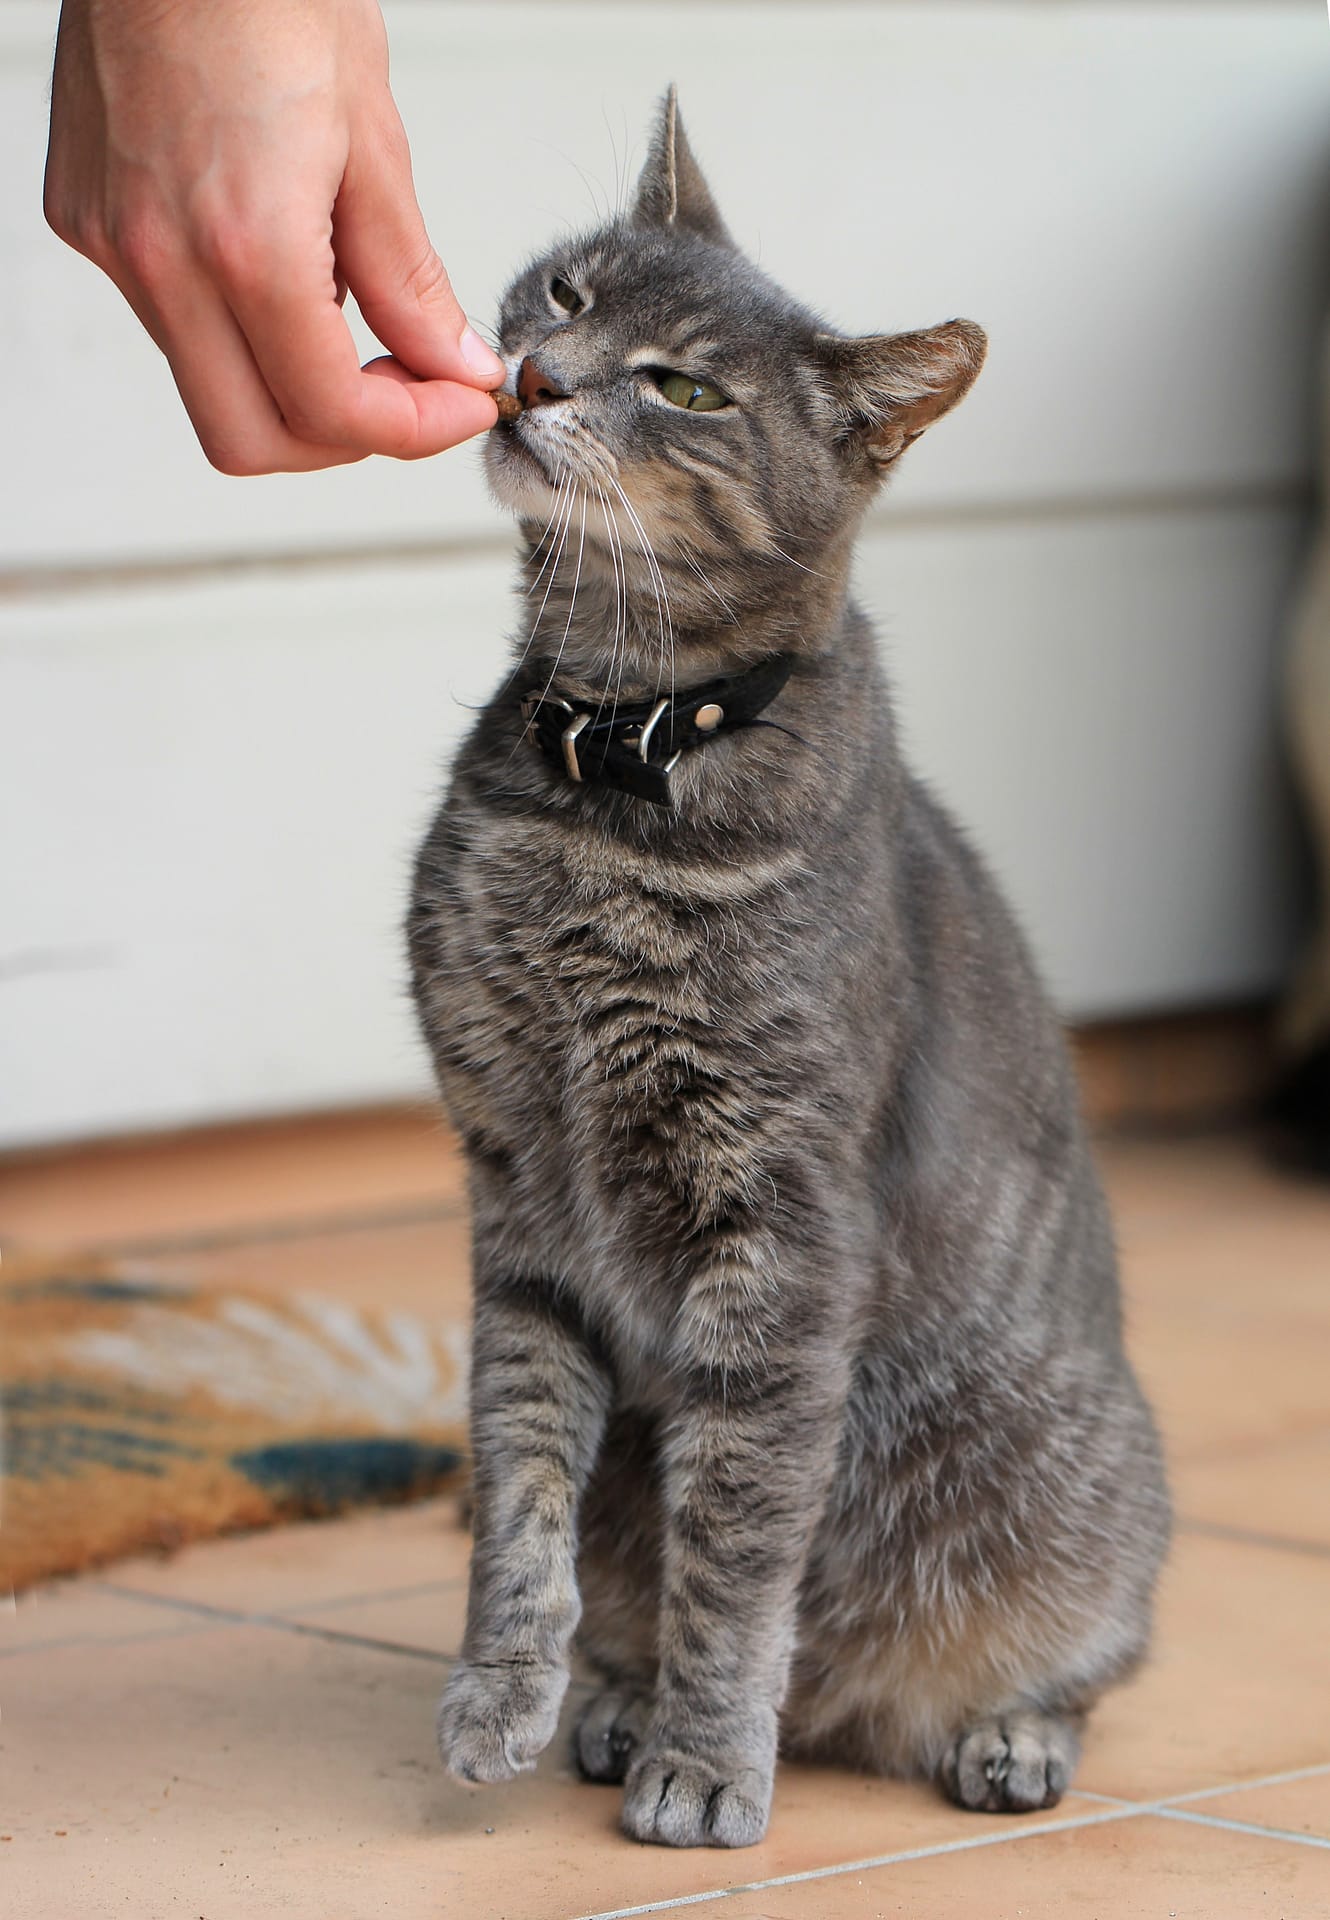 Cat being fed a CBD treat